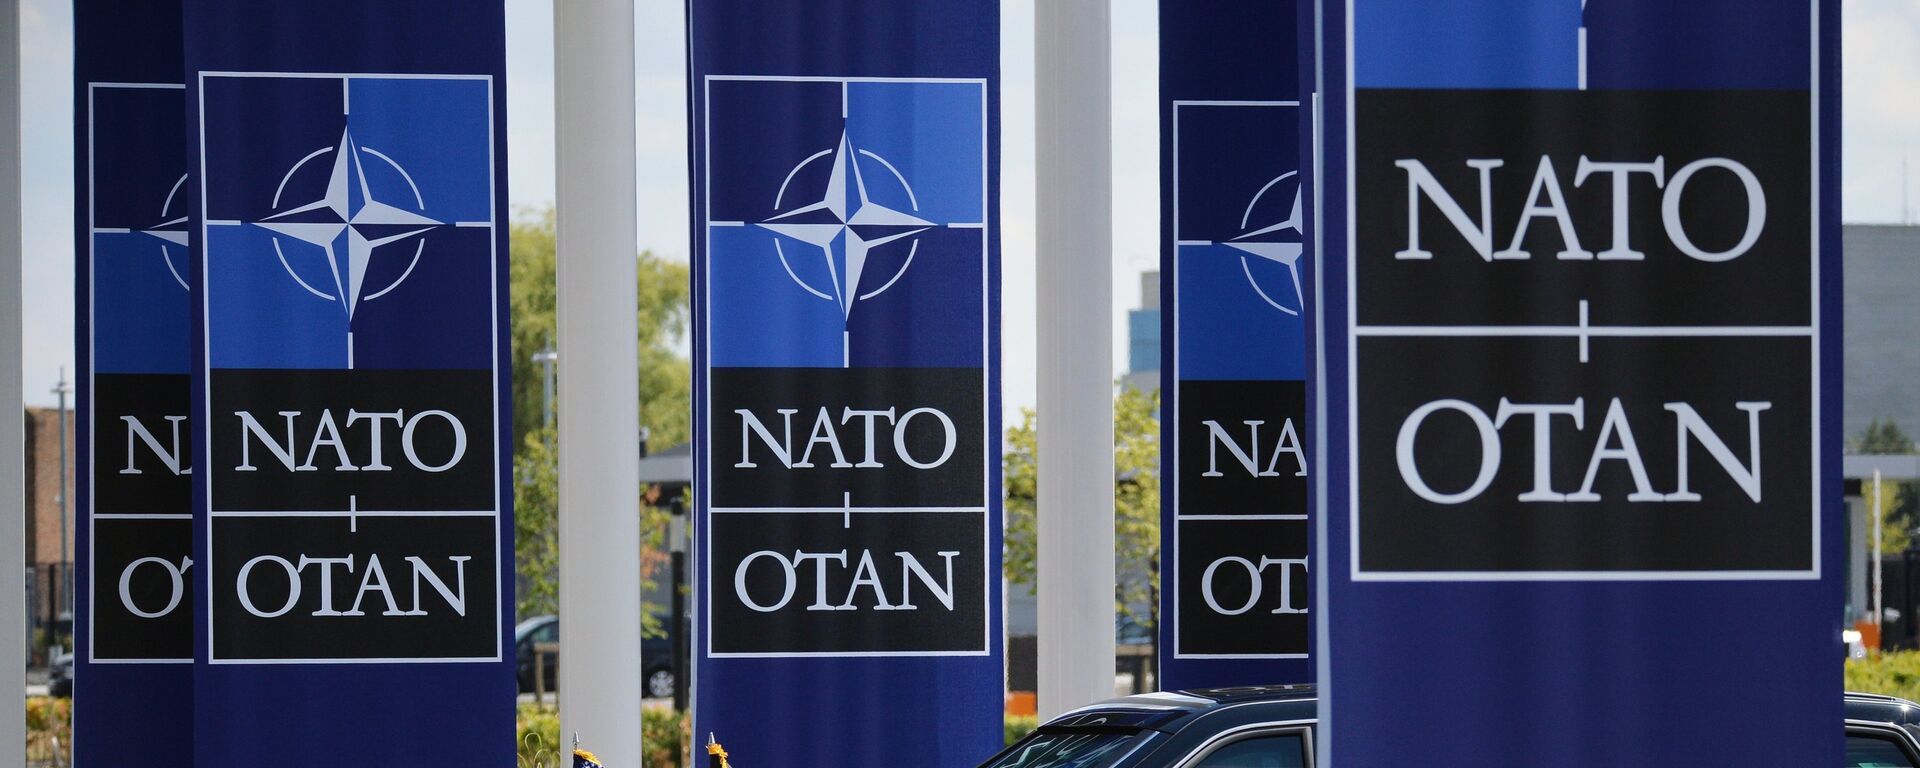 Автомобиль президента США Дональда Трампа на саммите НАТО - Sputnik Қазақстан, 1920, 13.01.2022